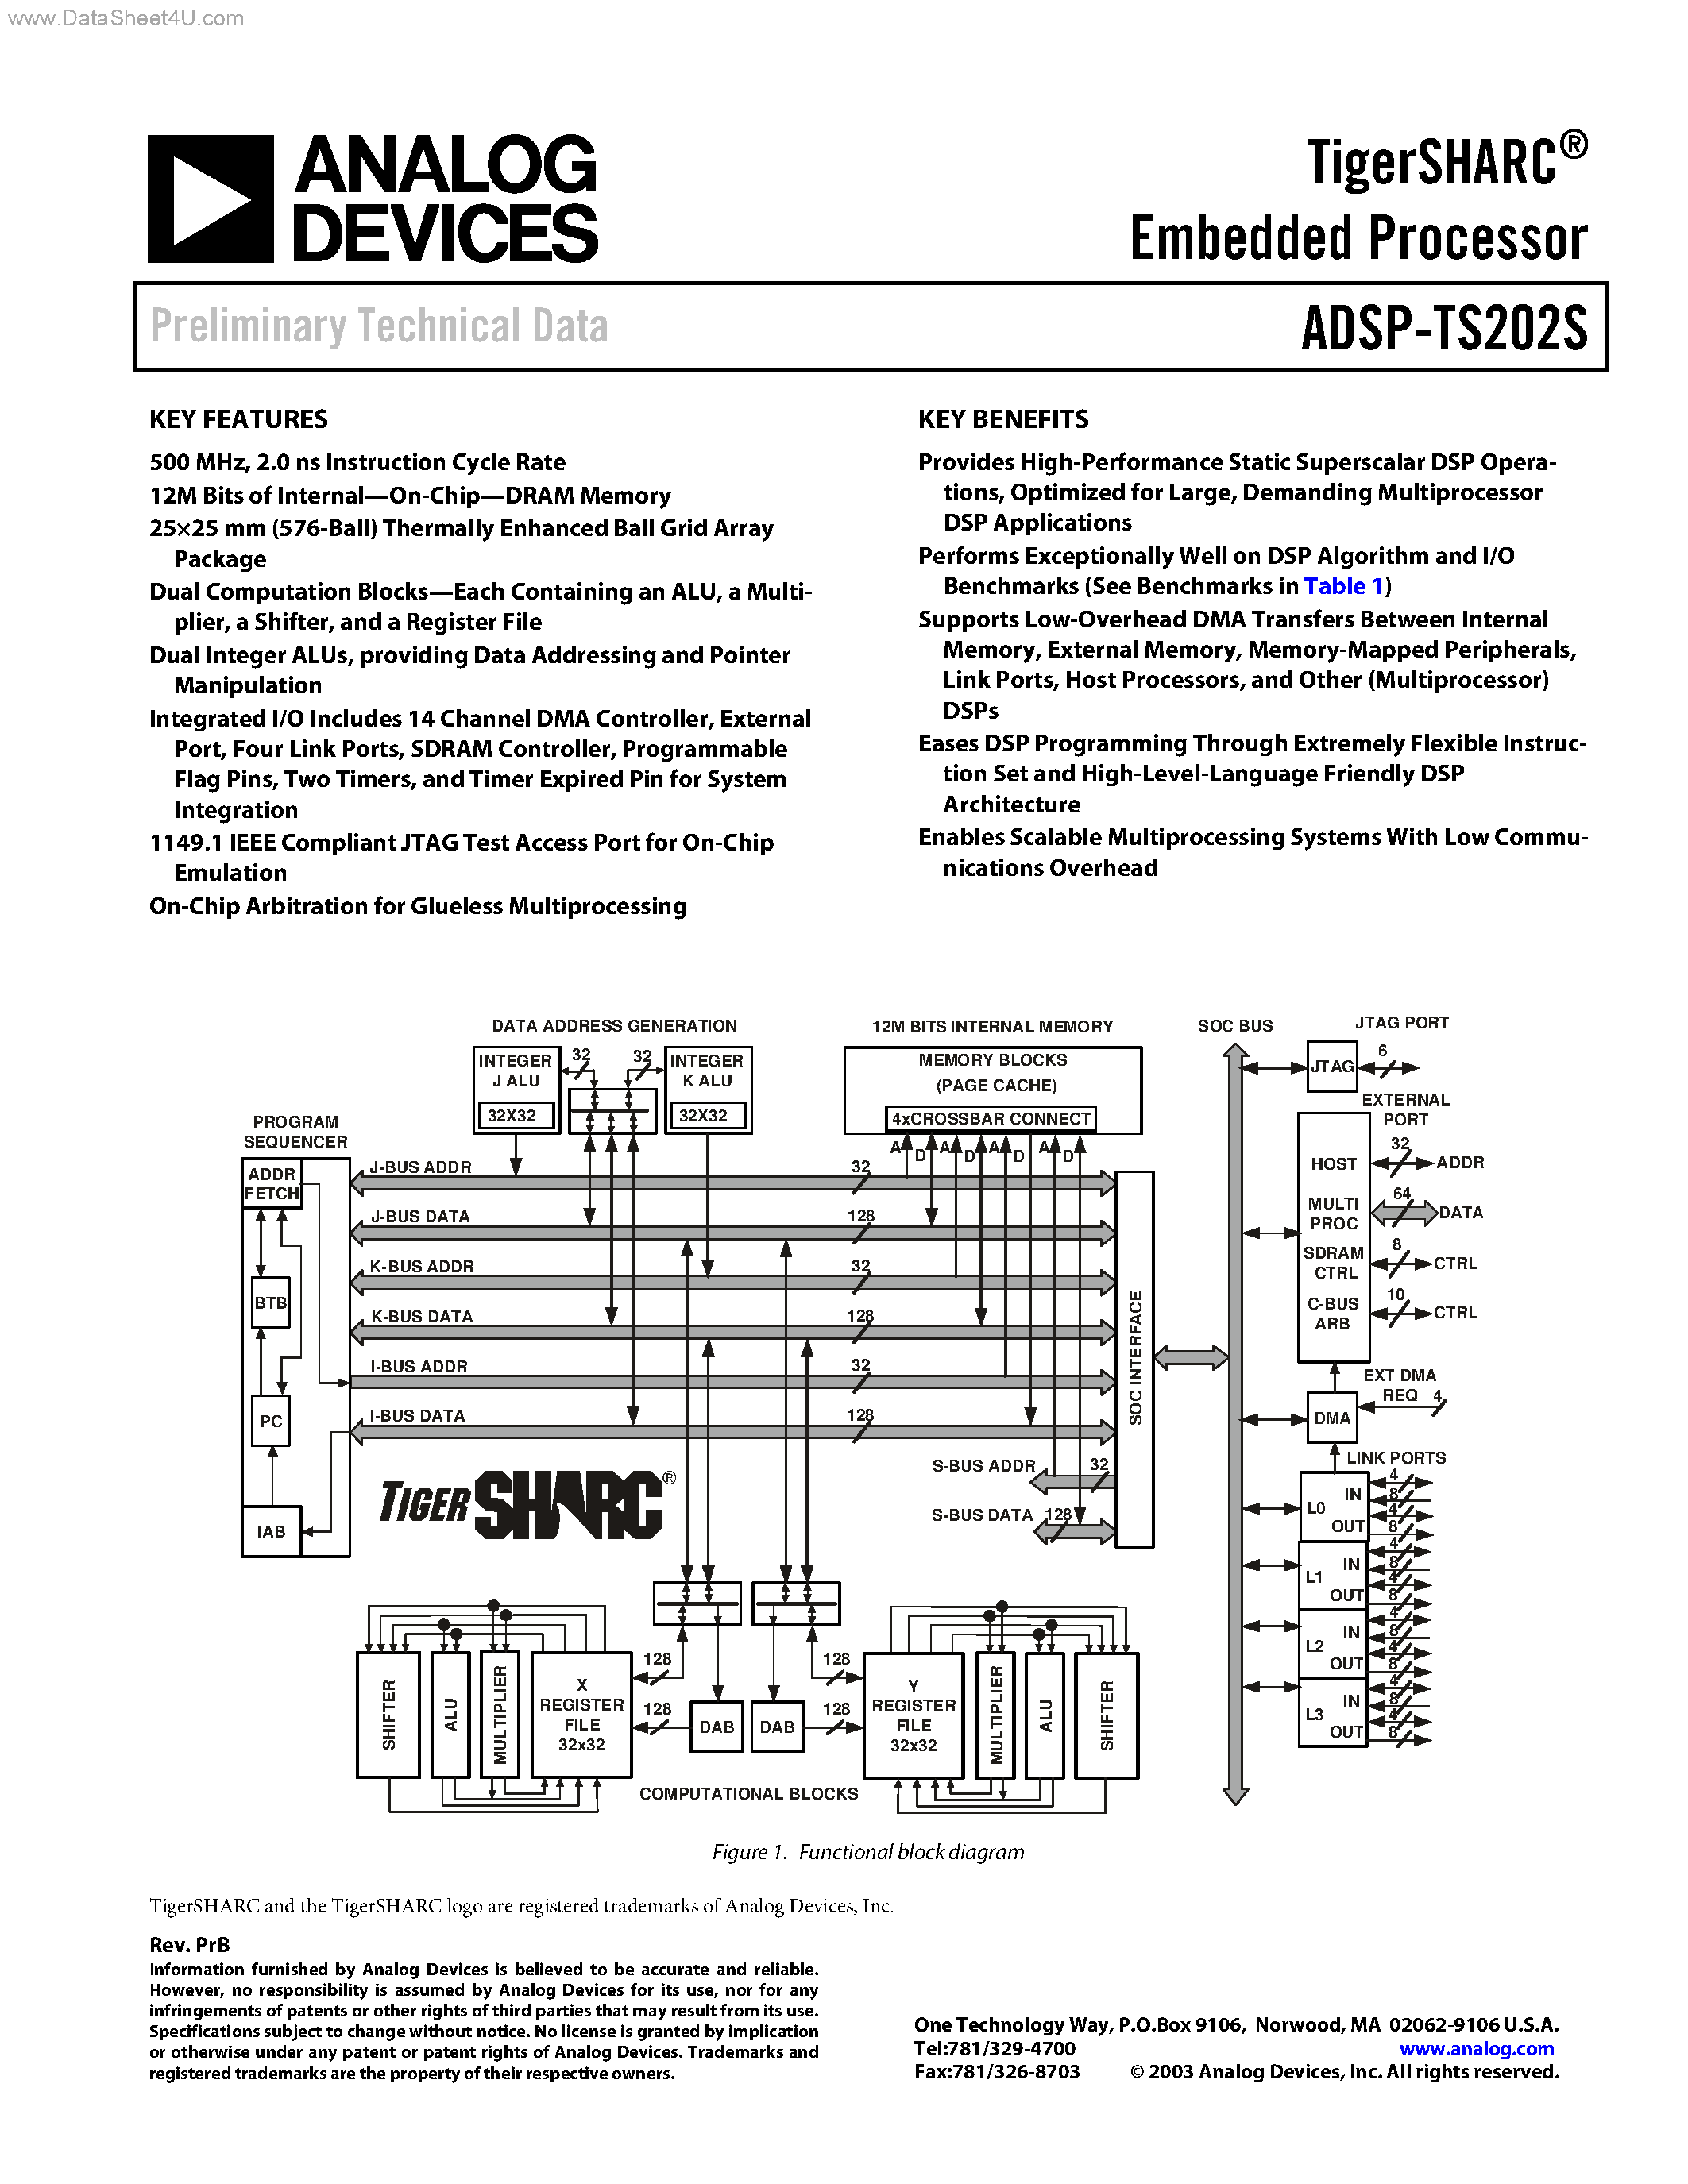 Даташит ADSP-TS202S - TigerSHARC Embedded Processor страница 1